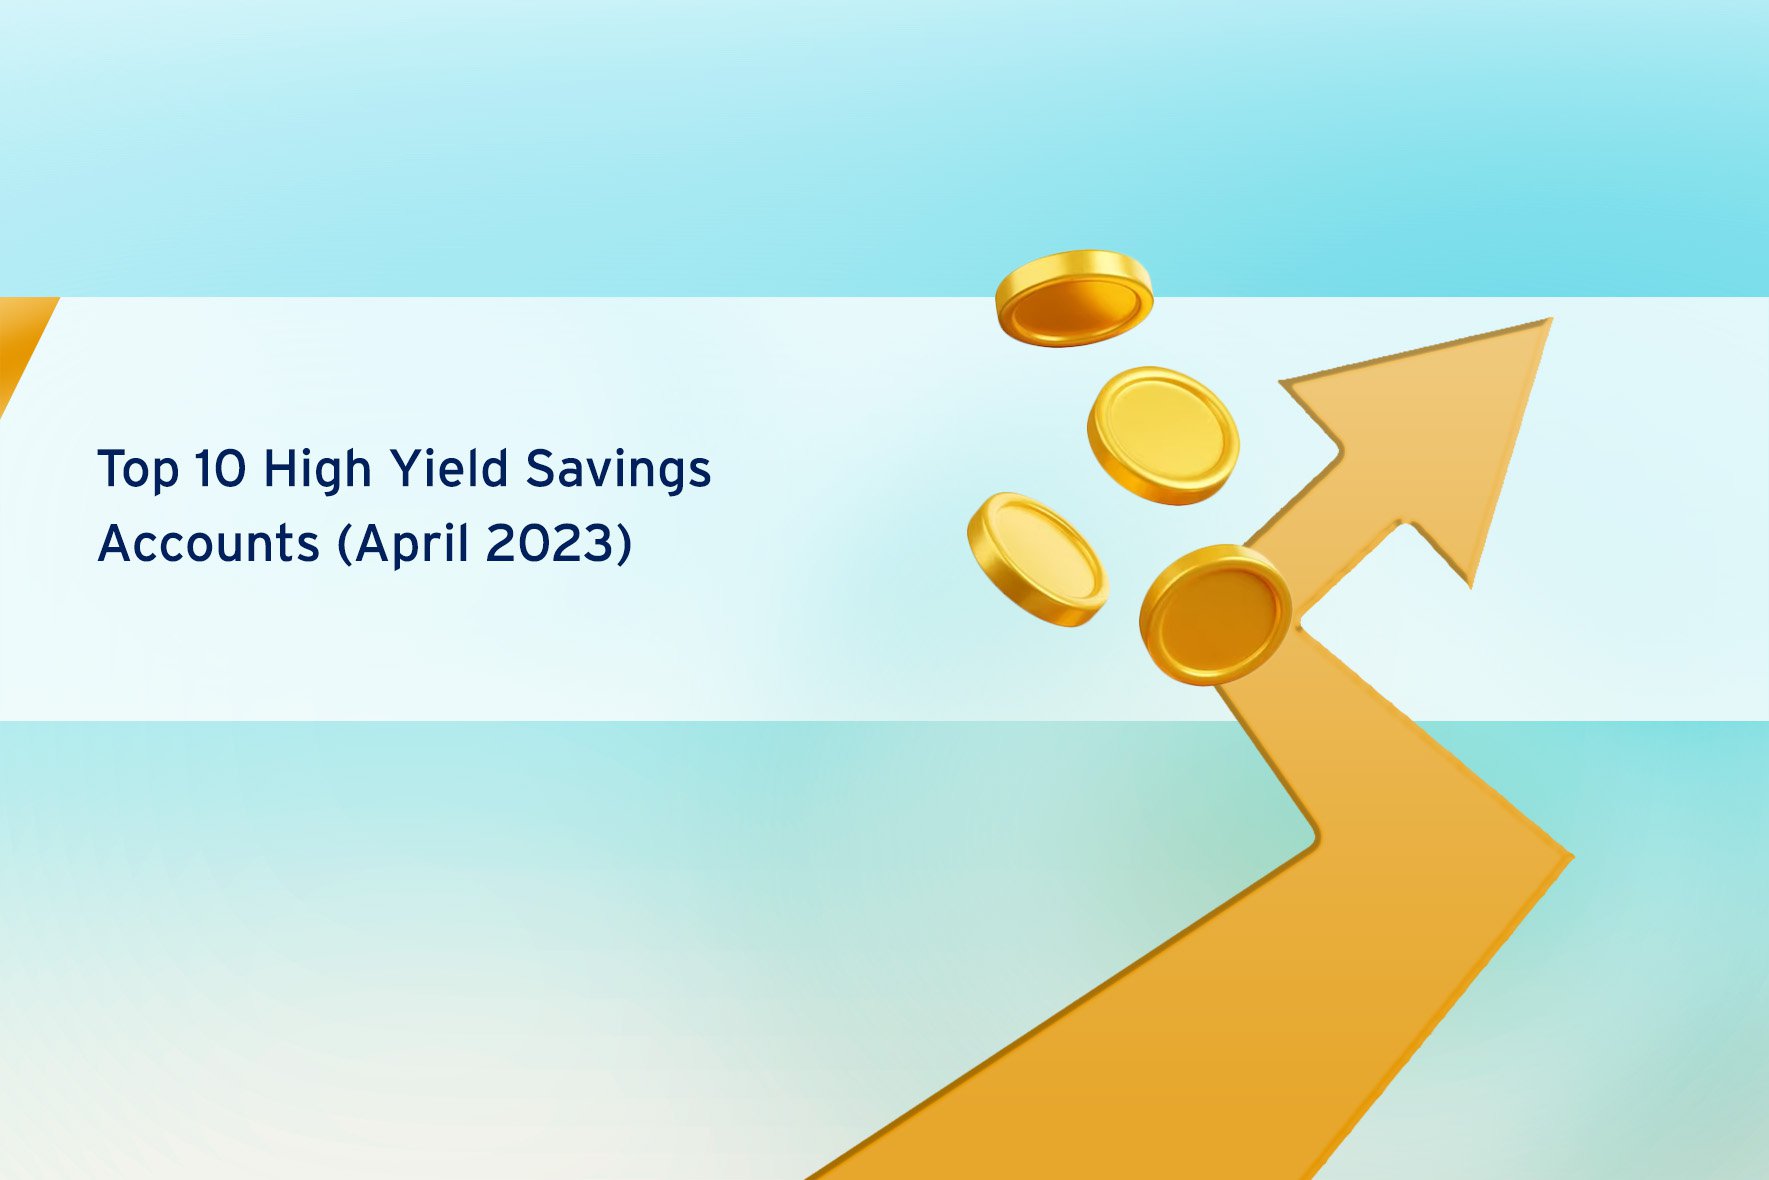 Top 10 High Yield Savings Accounts (April 2023) cover